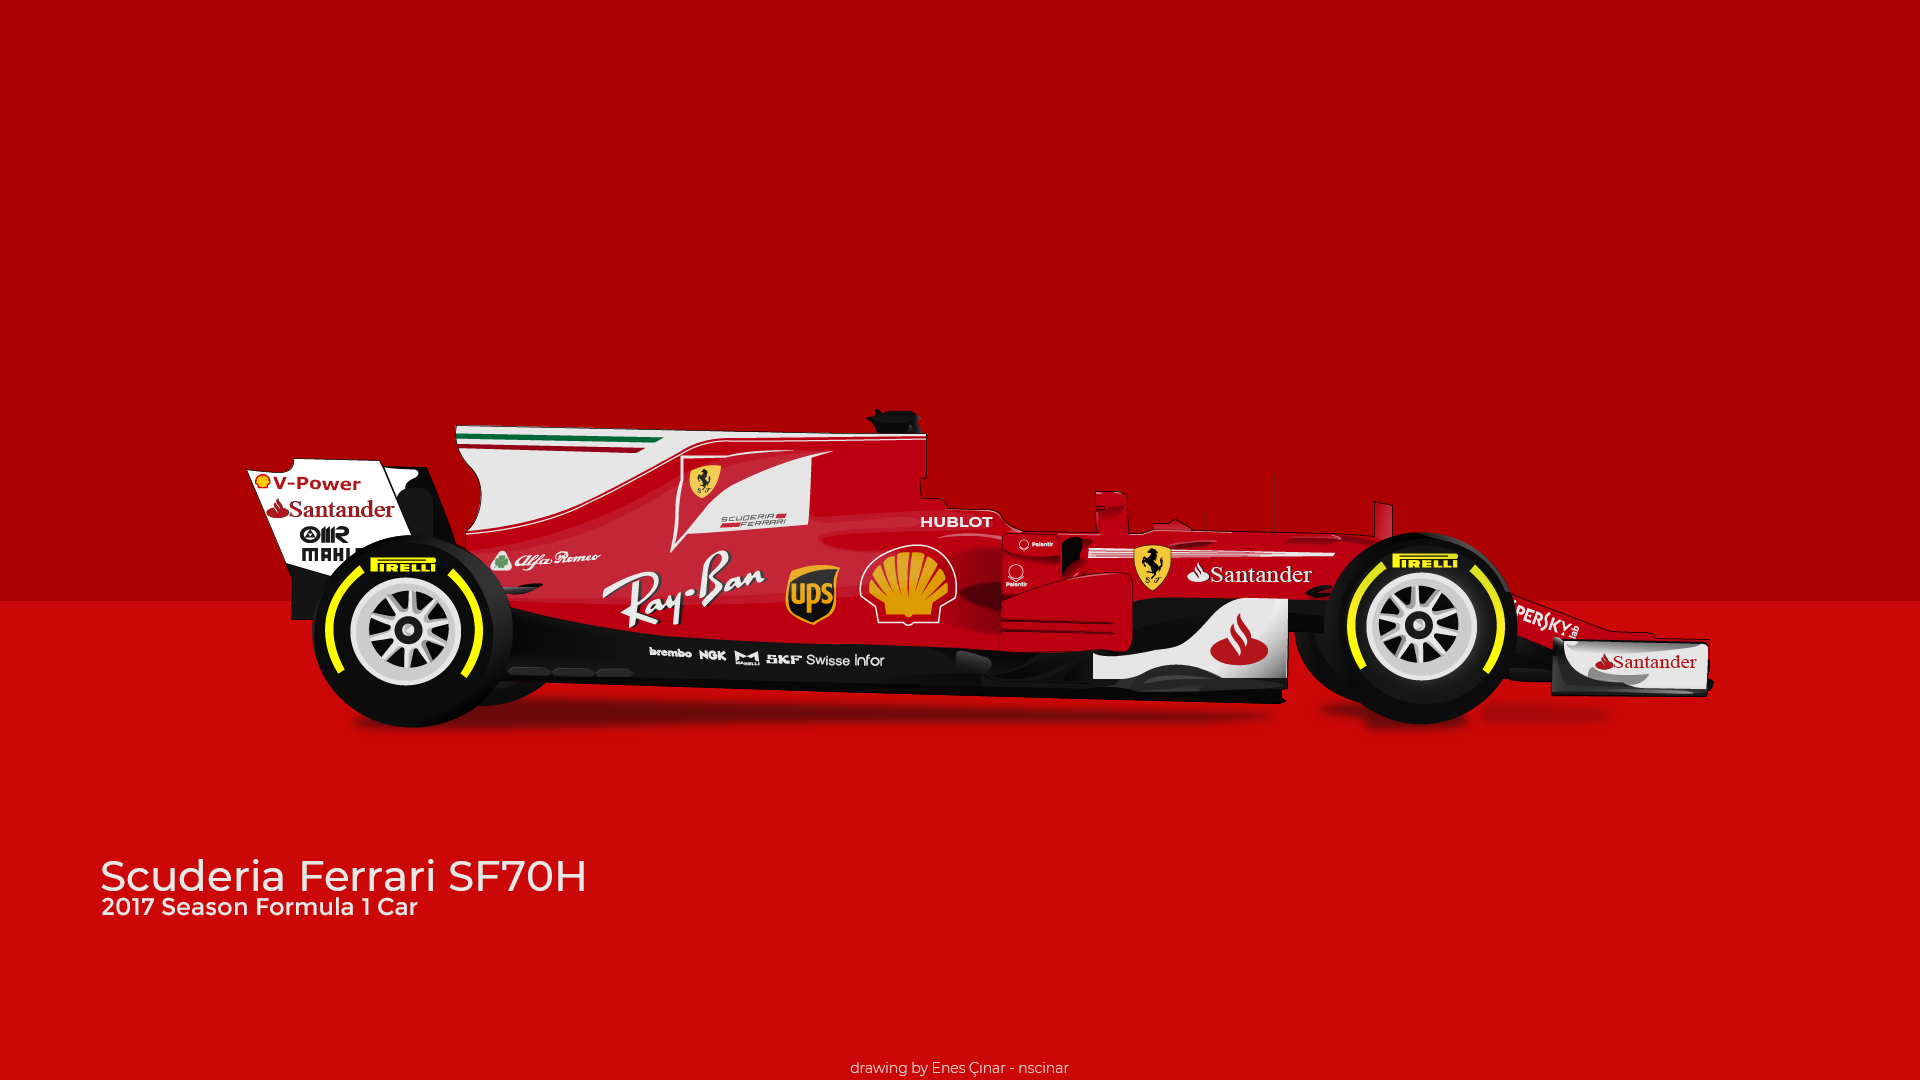 Scuderia Ferrari SF70H Illustration by nscinar on DeviantArt